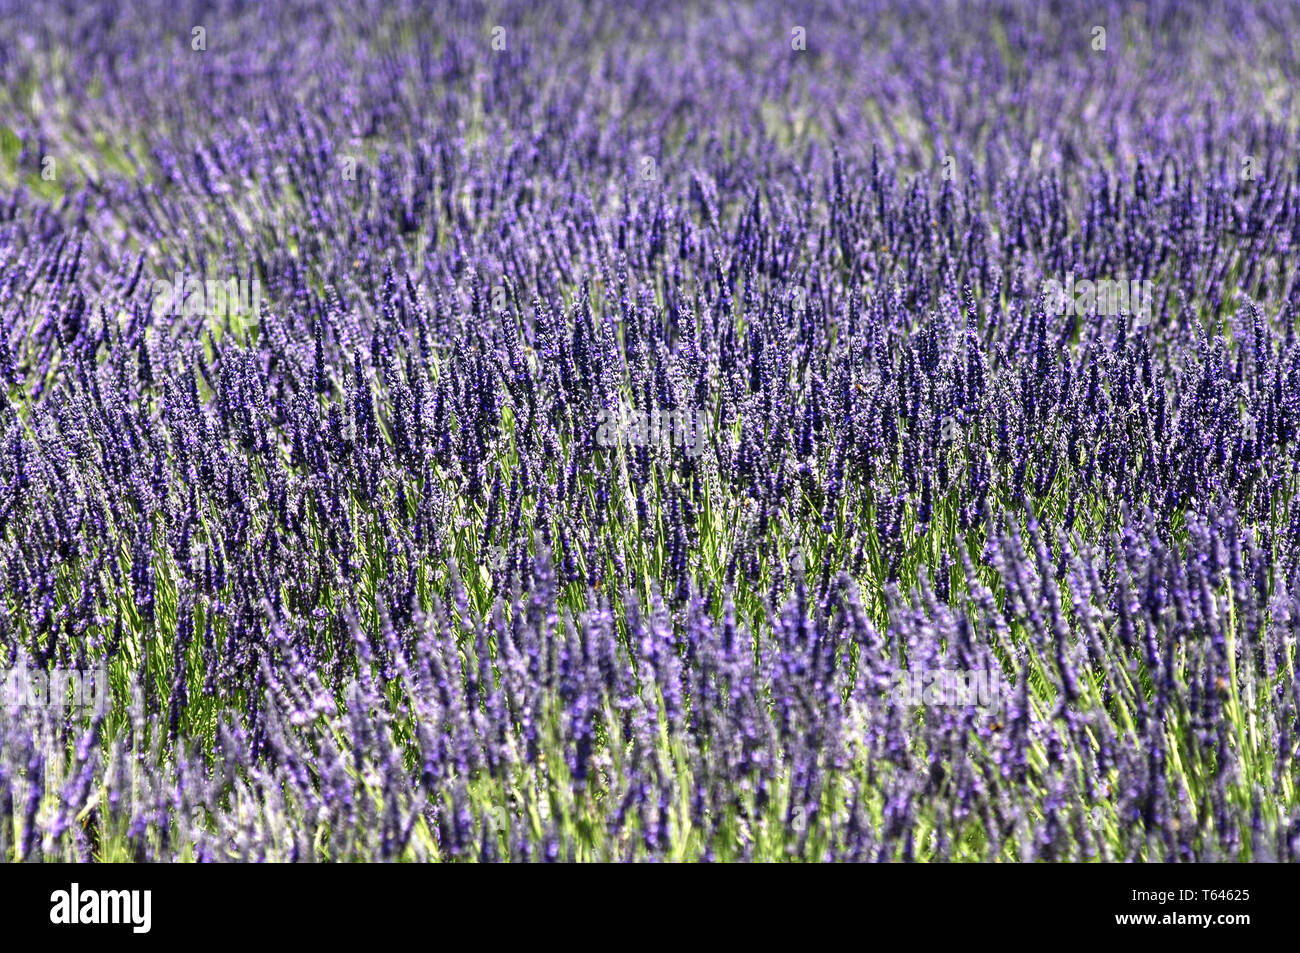 Lavender plant, Lavandula angustifolia Stock Photo